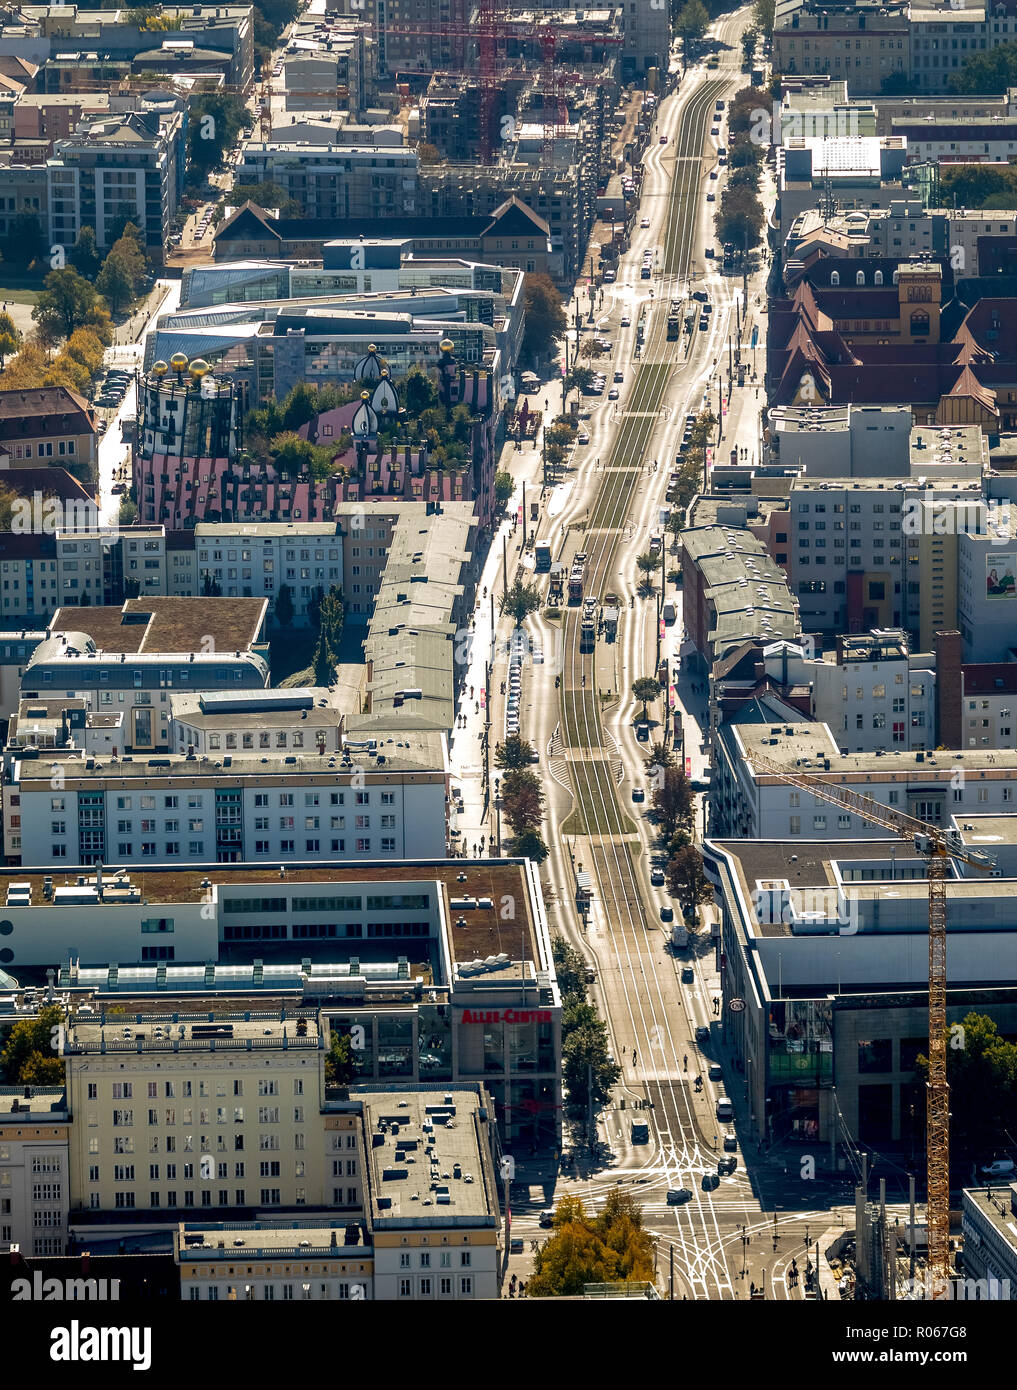 Vista aerea, la principale strada transitabile di Magdeburgo, Breiter Weg, i binari del tram, Downtown, Midtown, Magdeburgo, Sassonia-Anhalt, Germania, DEU, Europa, vista aerea Foto Stock